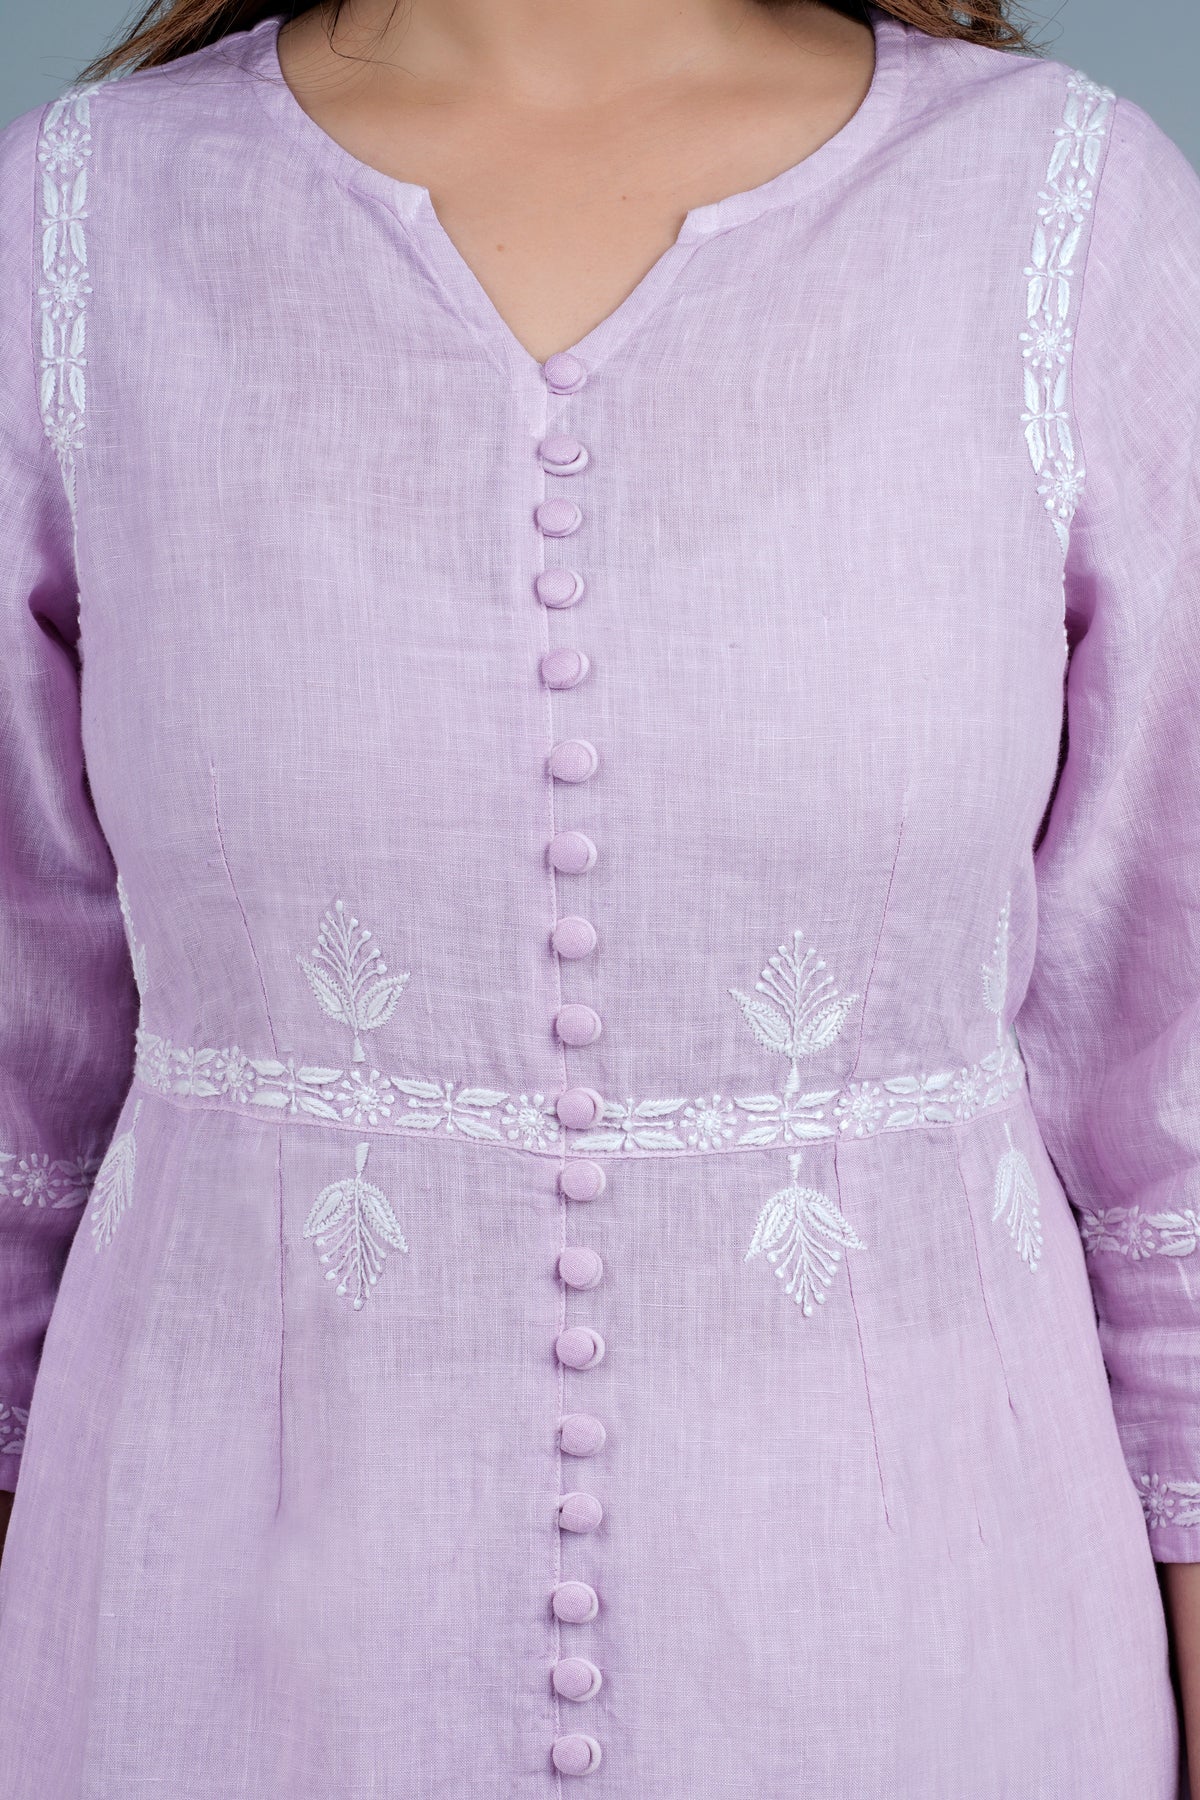 LALITA Linen-Cotton Hand Embroidered Tunic Kurti: Made to Order/Customizable